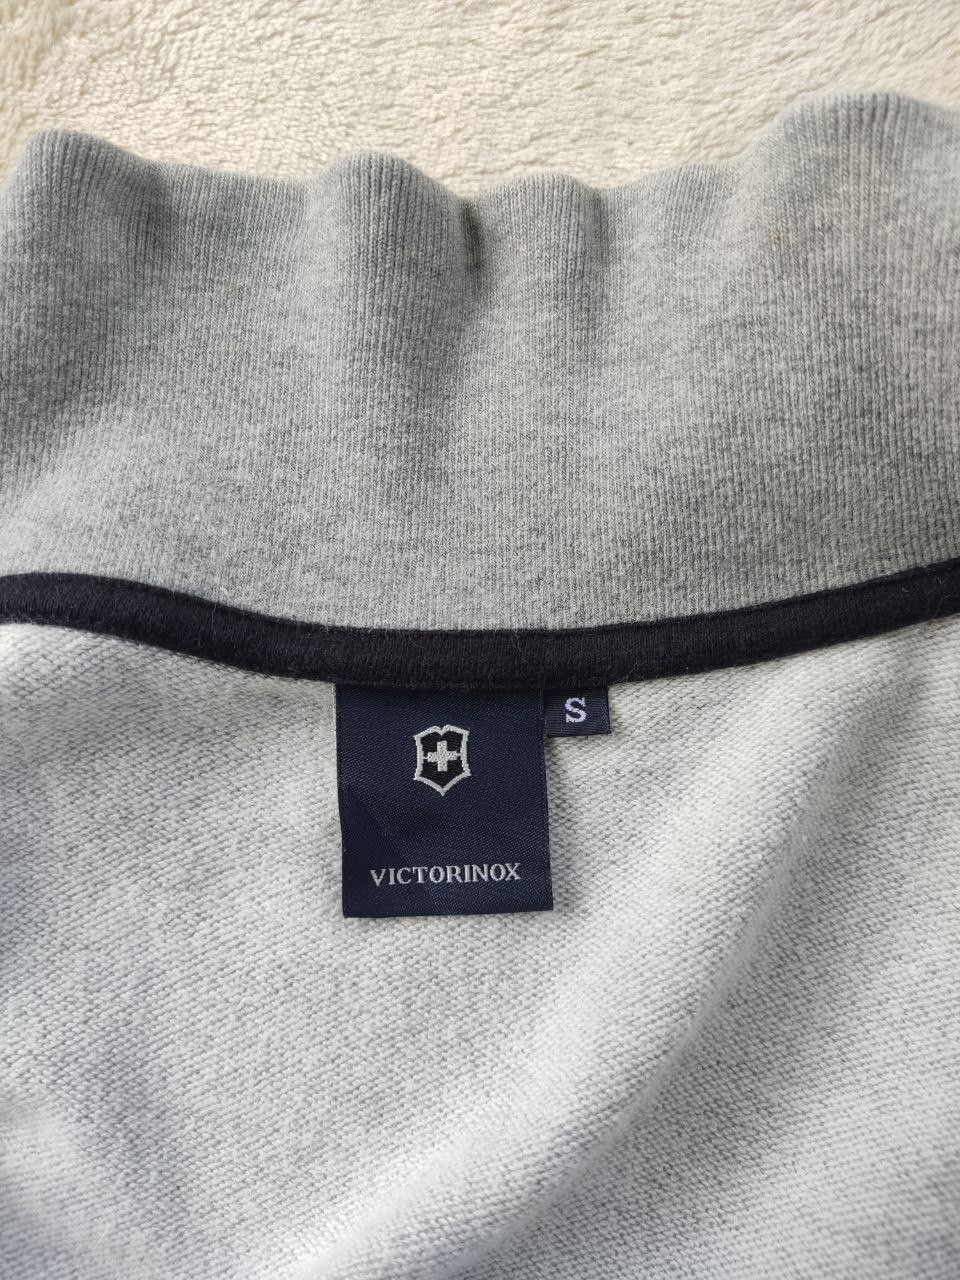 Archival Clothing - VICTORINOX Swiss Army Logo Tracktop Jacket - 10